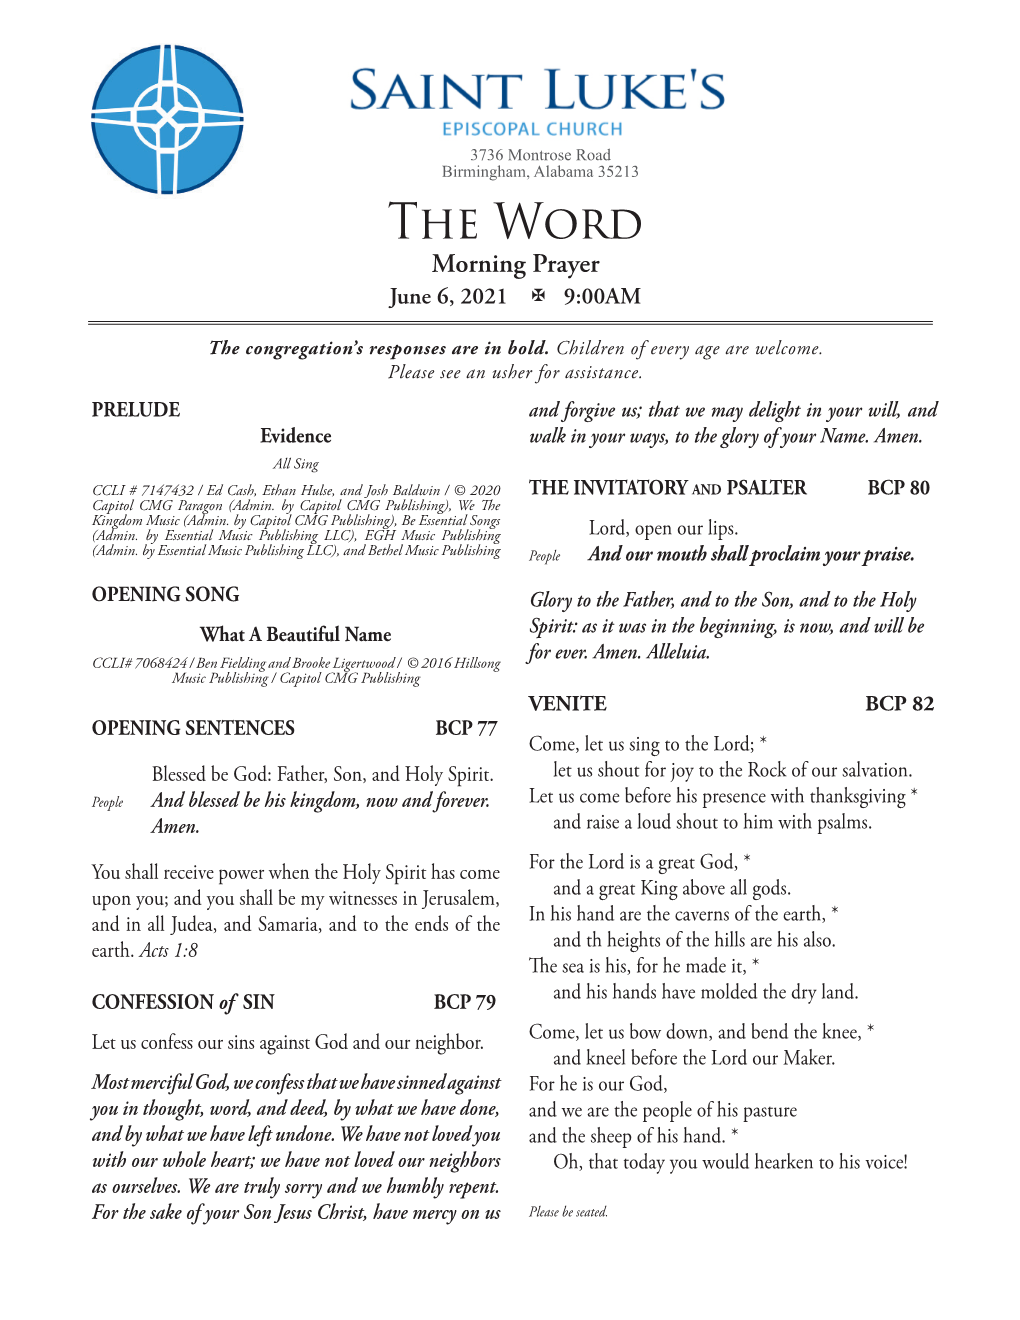 The Word Morning Prayer June 6, 2021 X 9:00AM